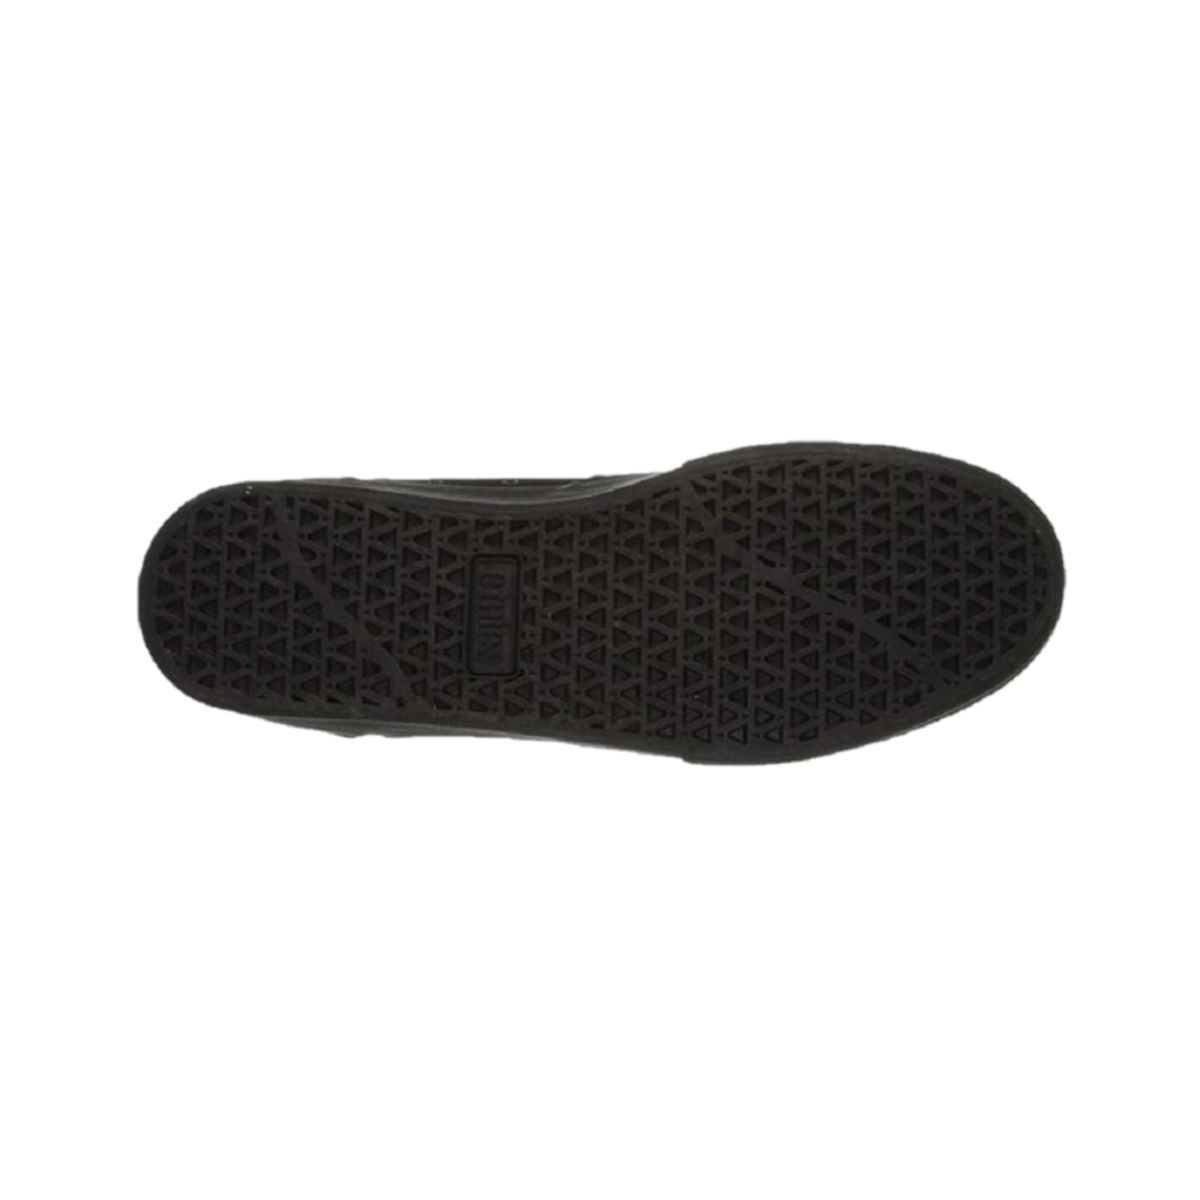 ETNIES 4101000351 004 BARGE LS MN'S (Medium) Black/Black Suede/Canvas Skate Shoes